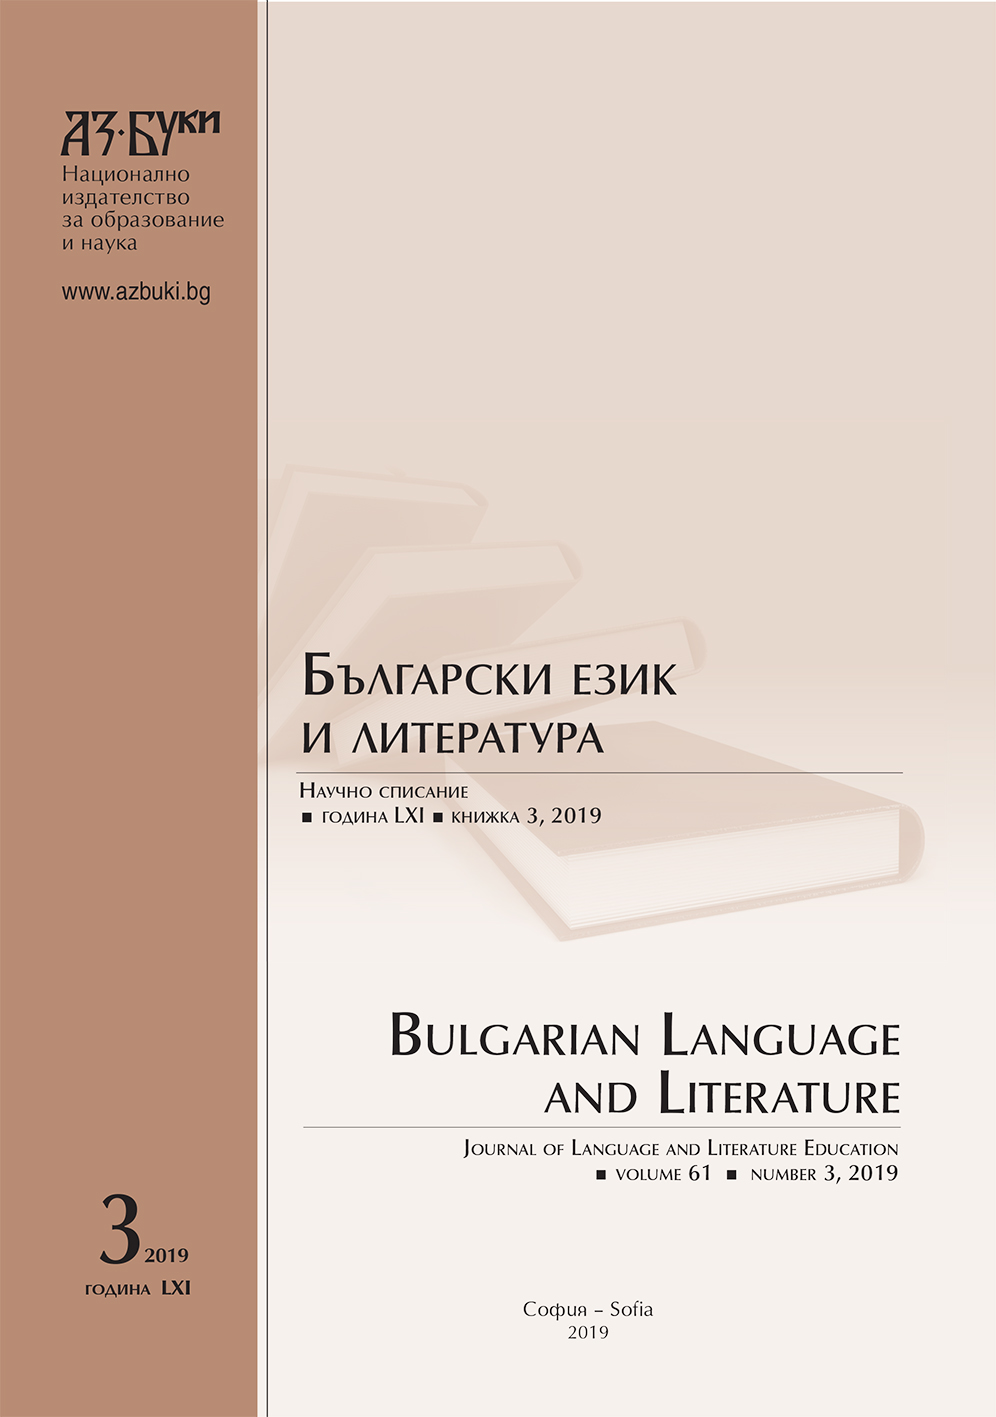 Online Forms in Slovak Language Training
at „Saint Kliment Ohridski“ University of Sofia Cover Image